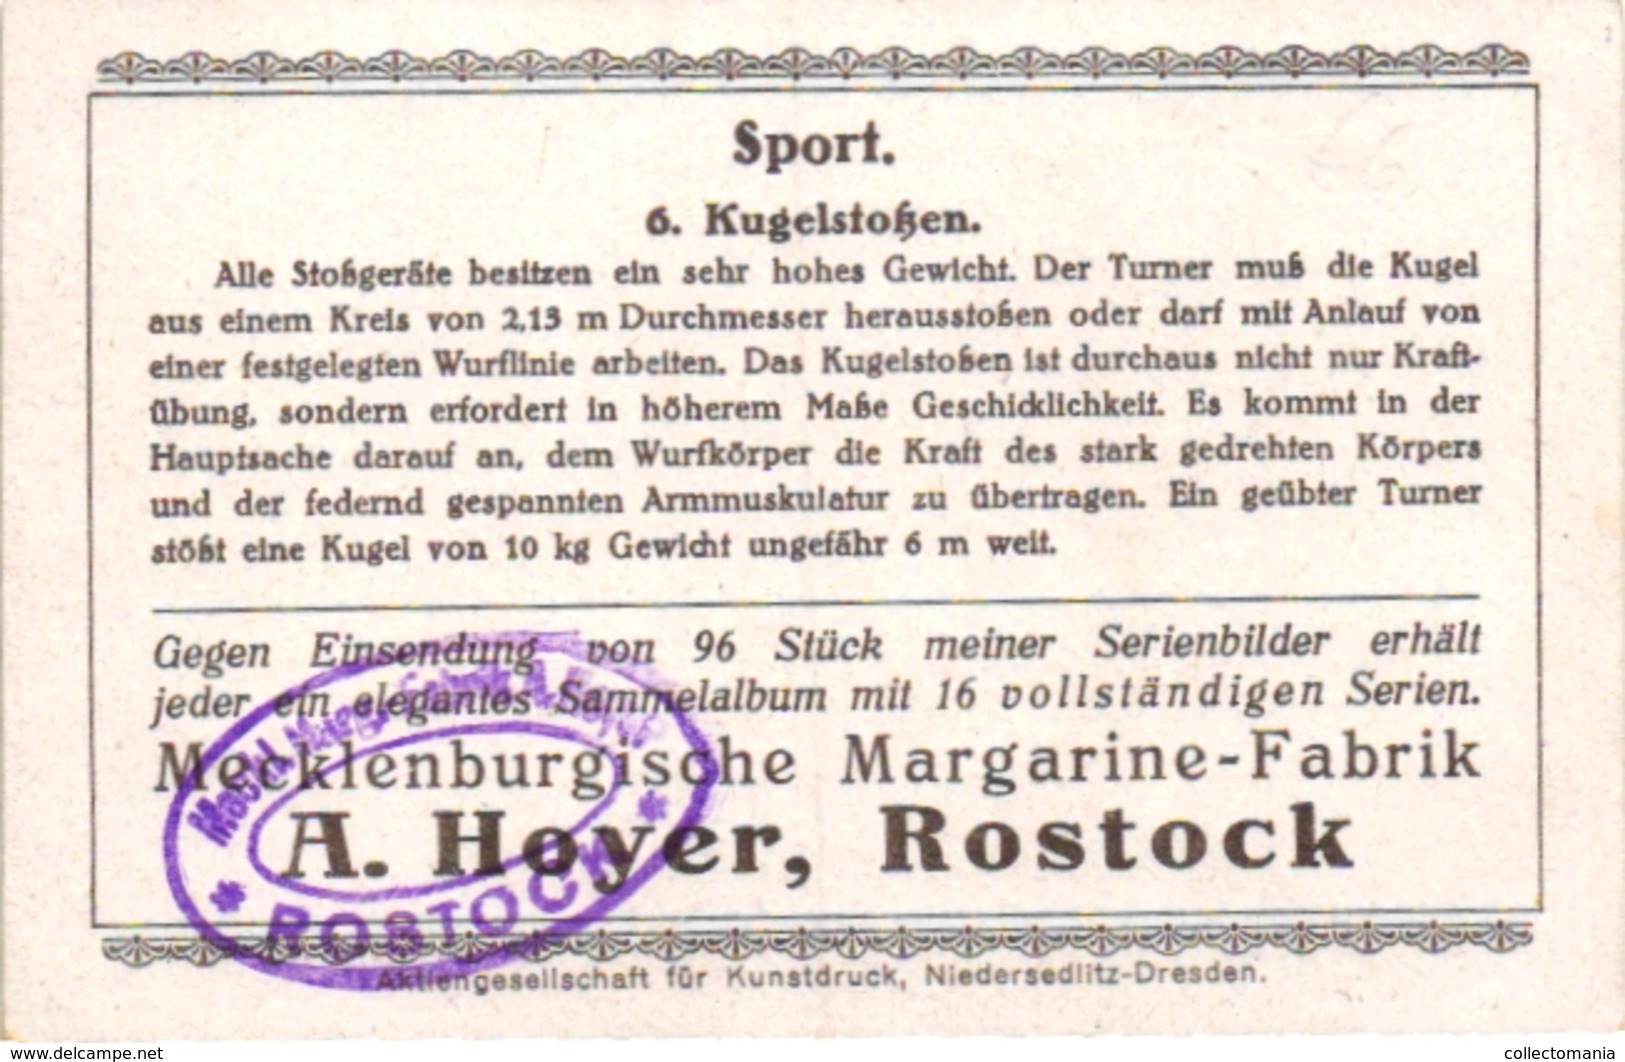 8 Cards Kogelstoten Lancer du Poids Shot-Put Pub Olympia 1932 -1936 Hoyer Erdal